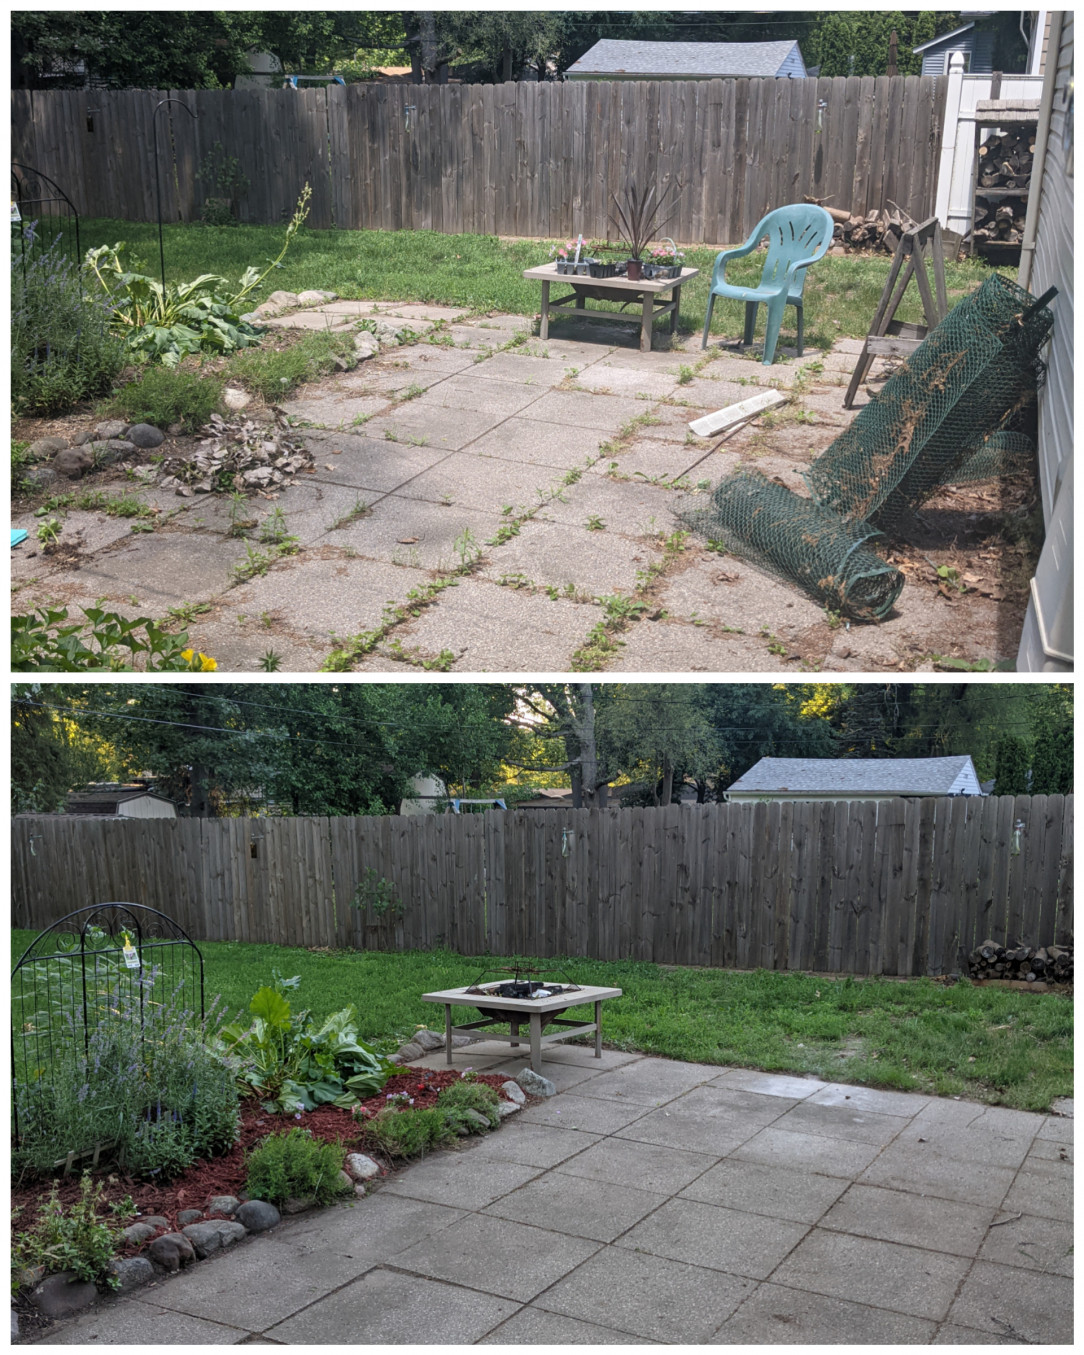 Finally got around to working on the backyard